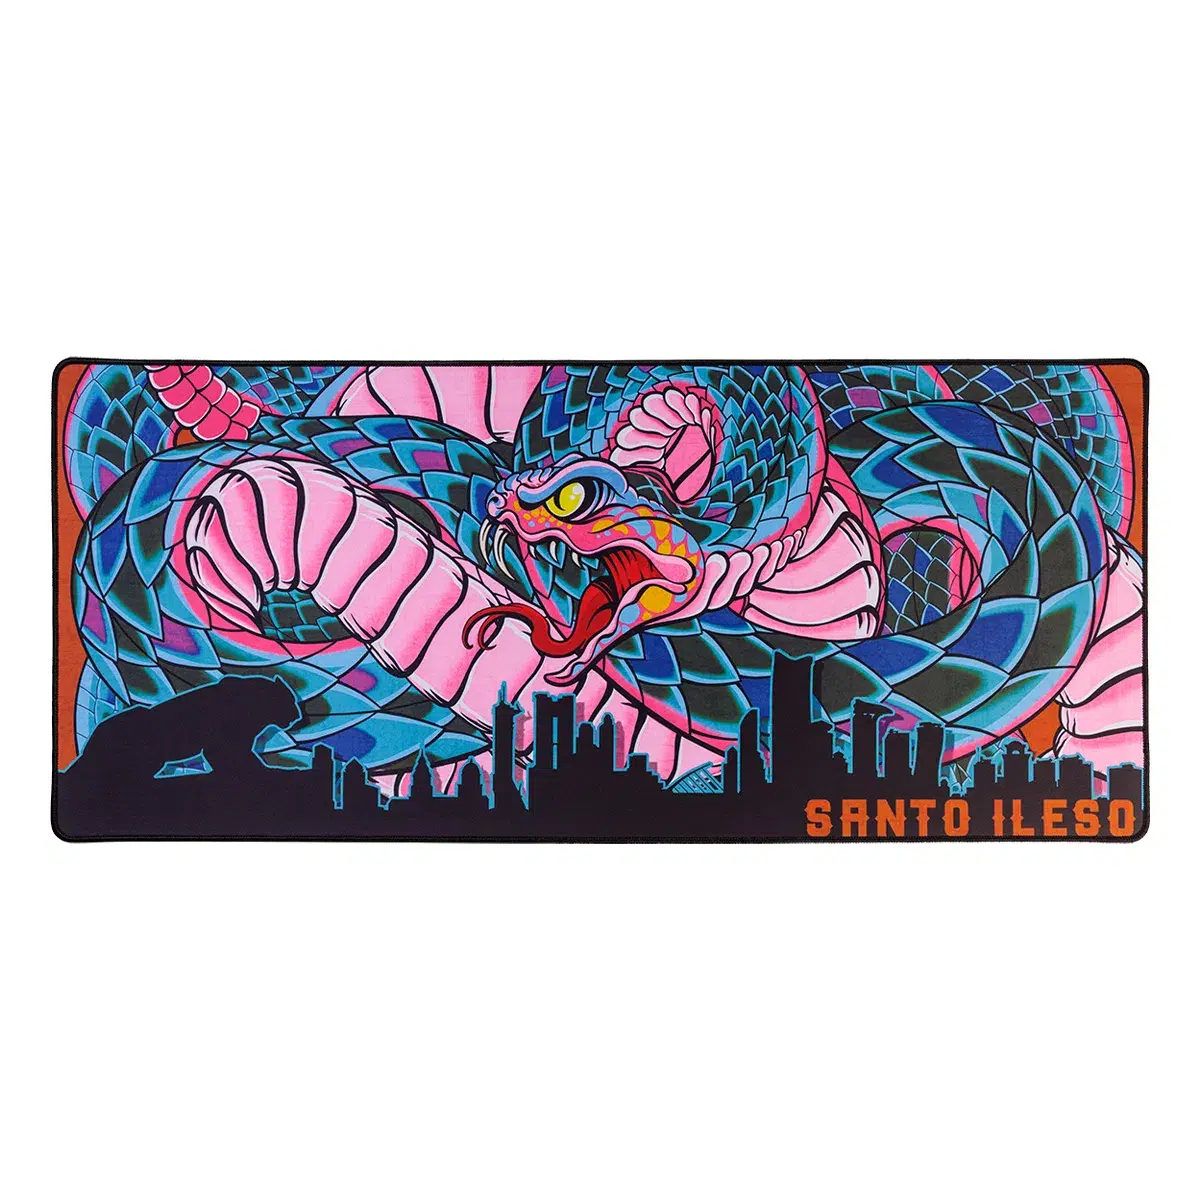 Saints Row Mousepad "Snake Mural" Cover